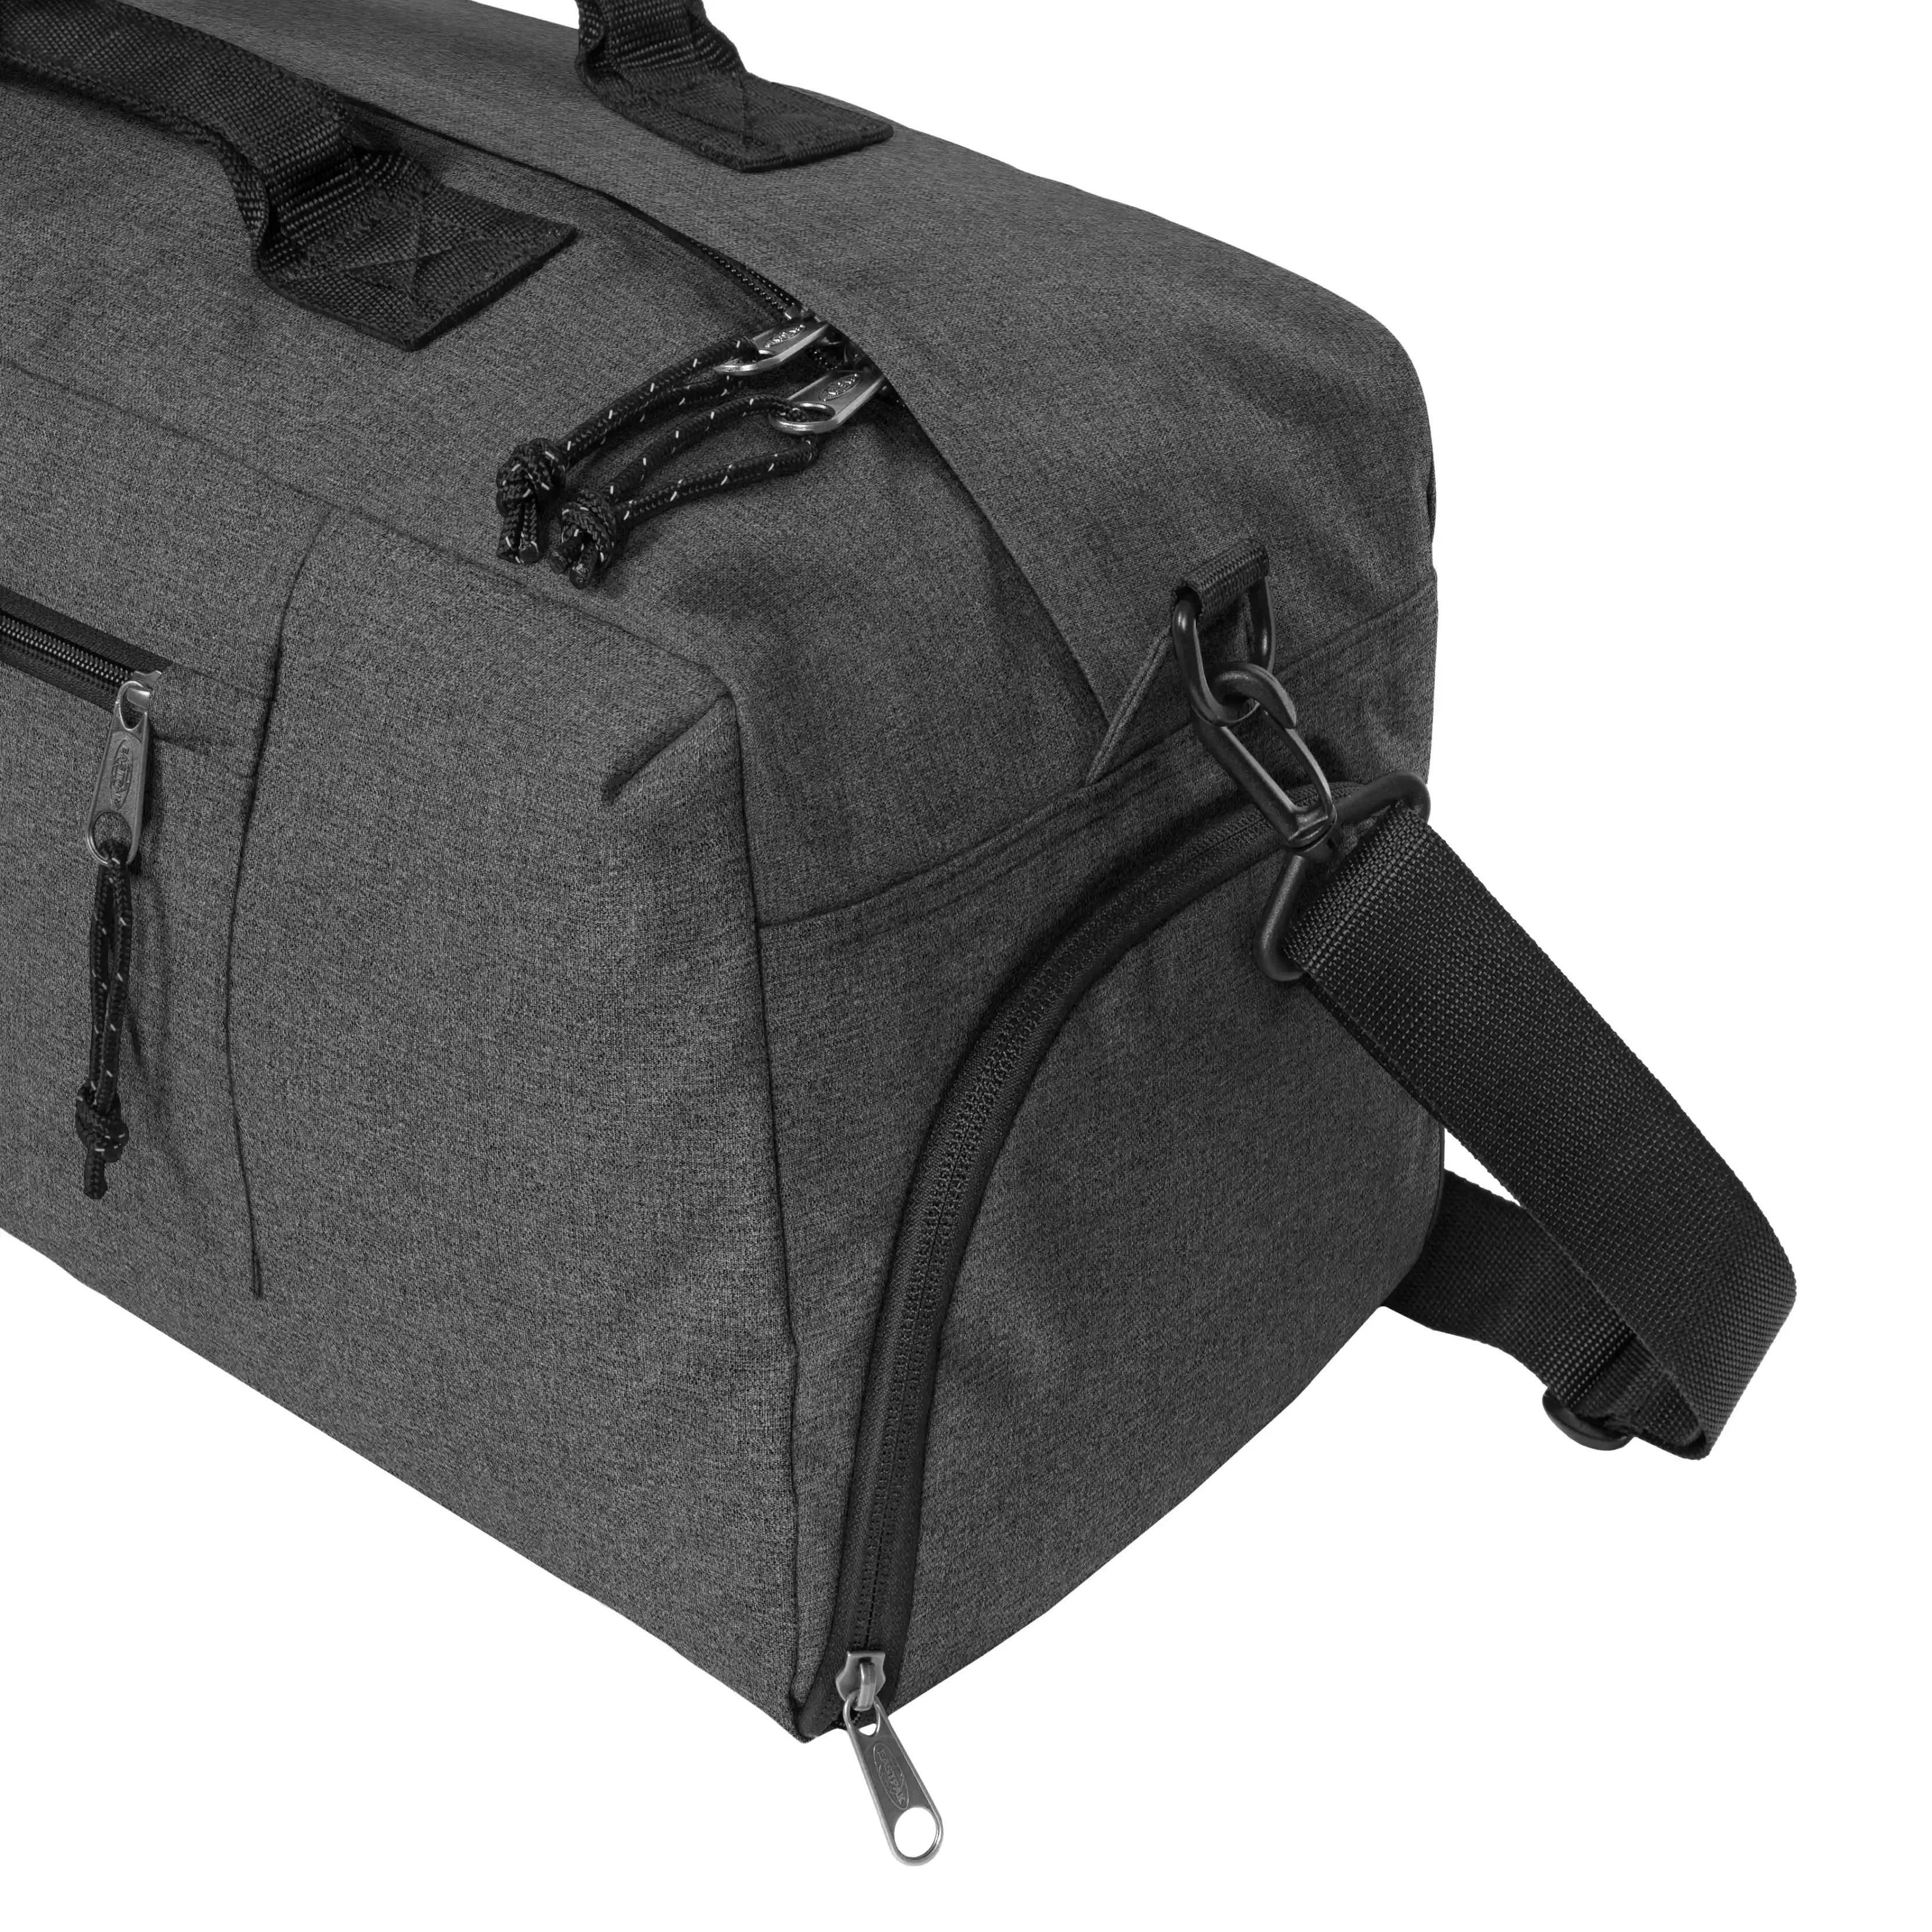 Eastpak Authentic Travel Duffl'r L Travel Bag 62 cm - Black Denim